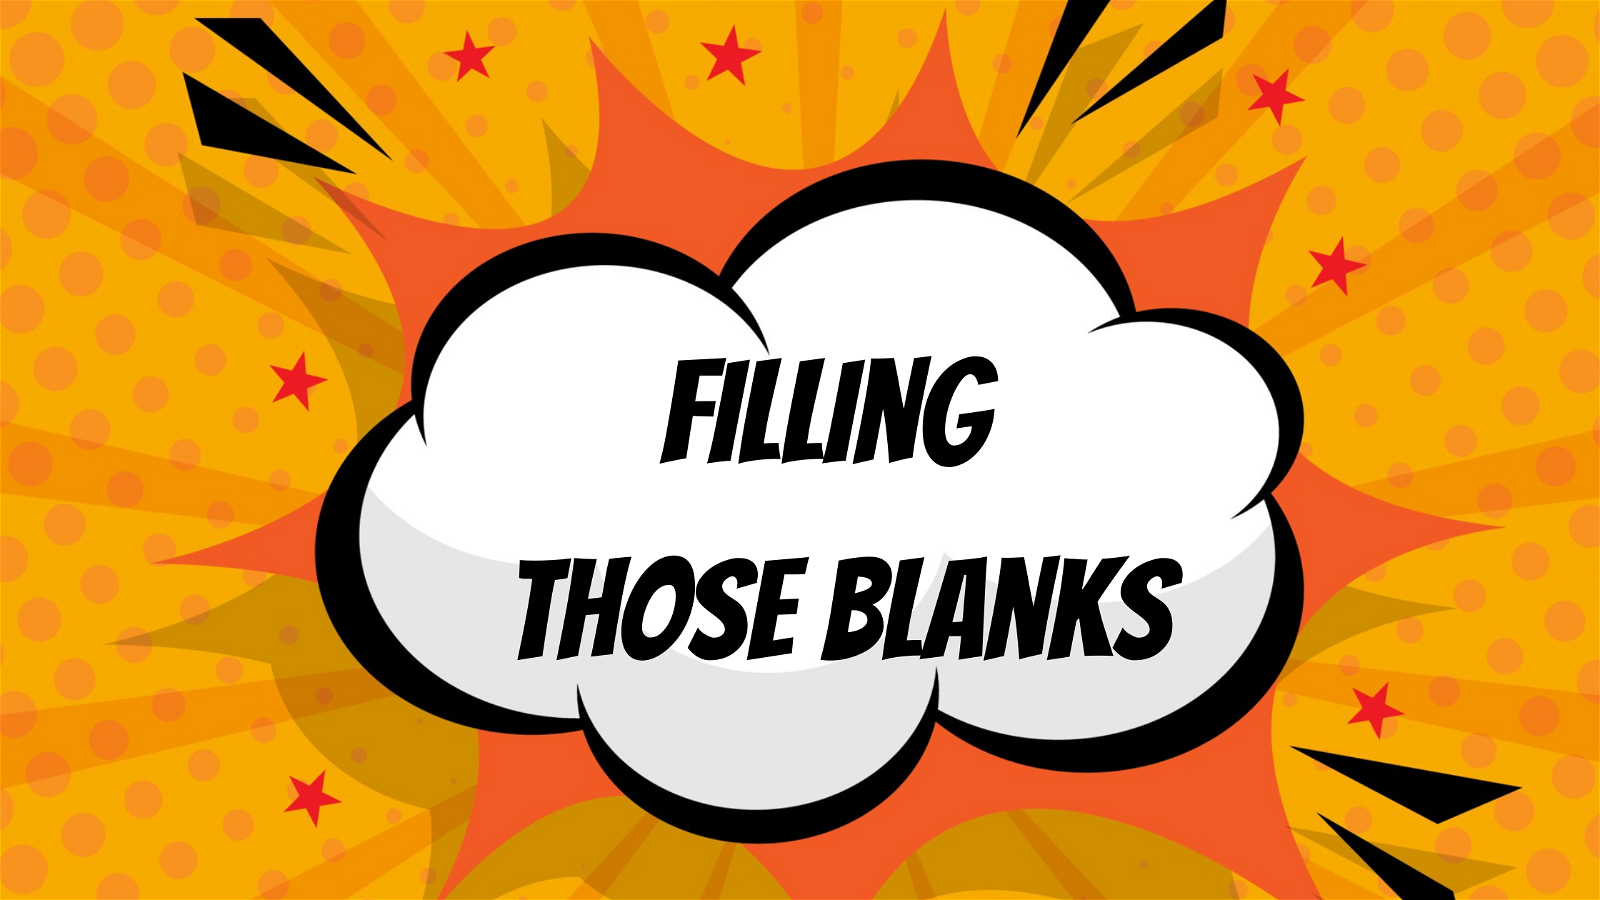 Filling those Blanks 3.0